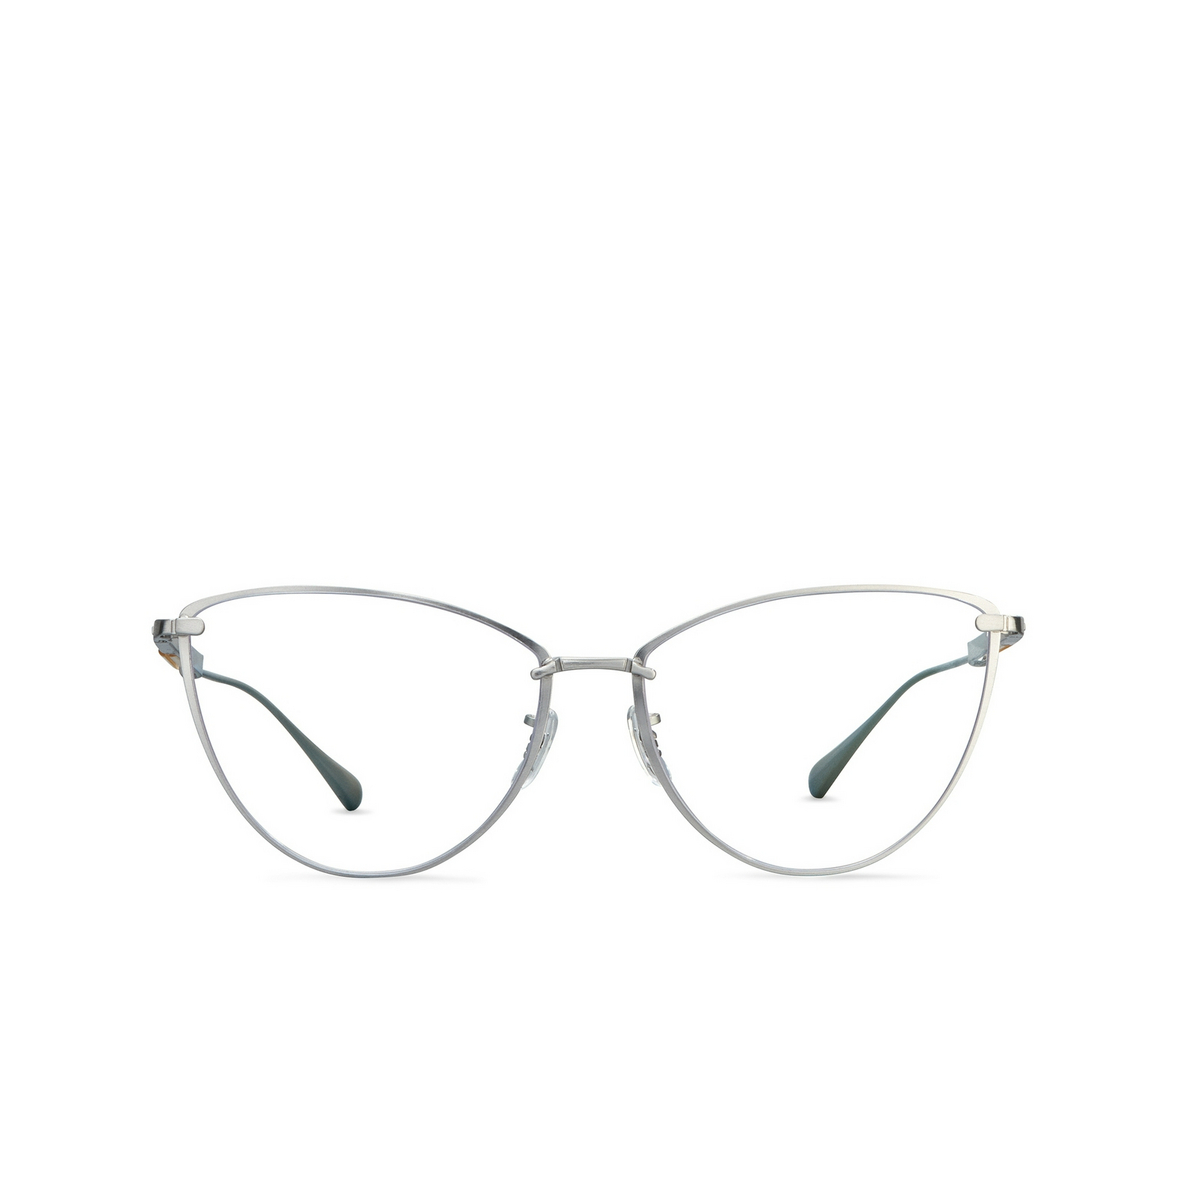 Mr. Leight BEVERLY CL Eyeglasses PLT-SMT Platinum-Summit - front view